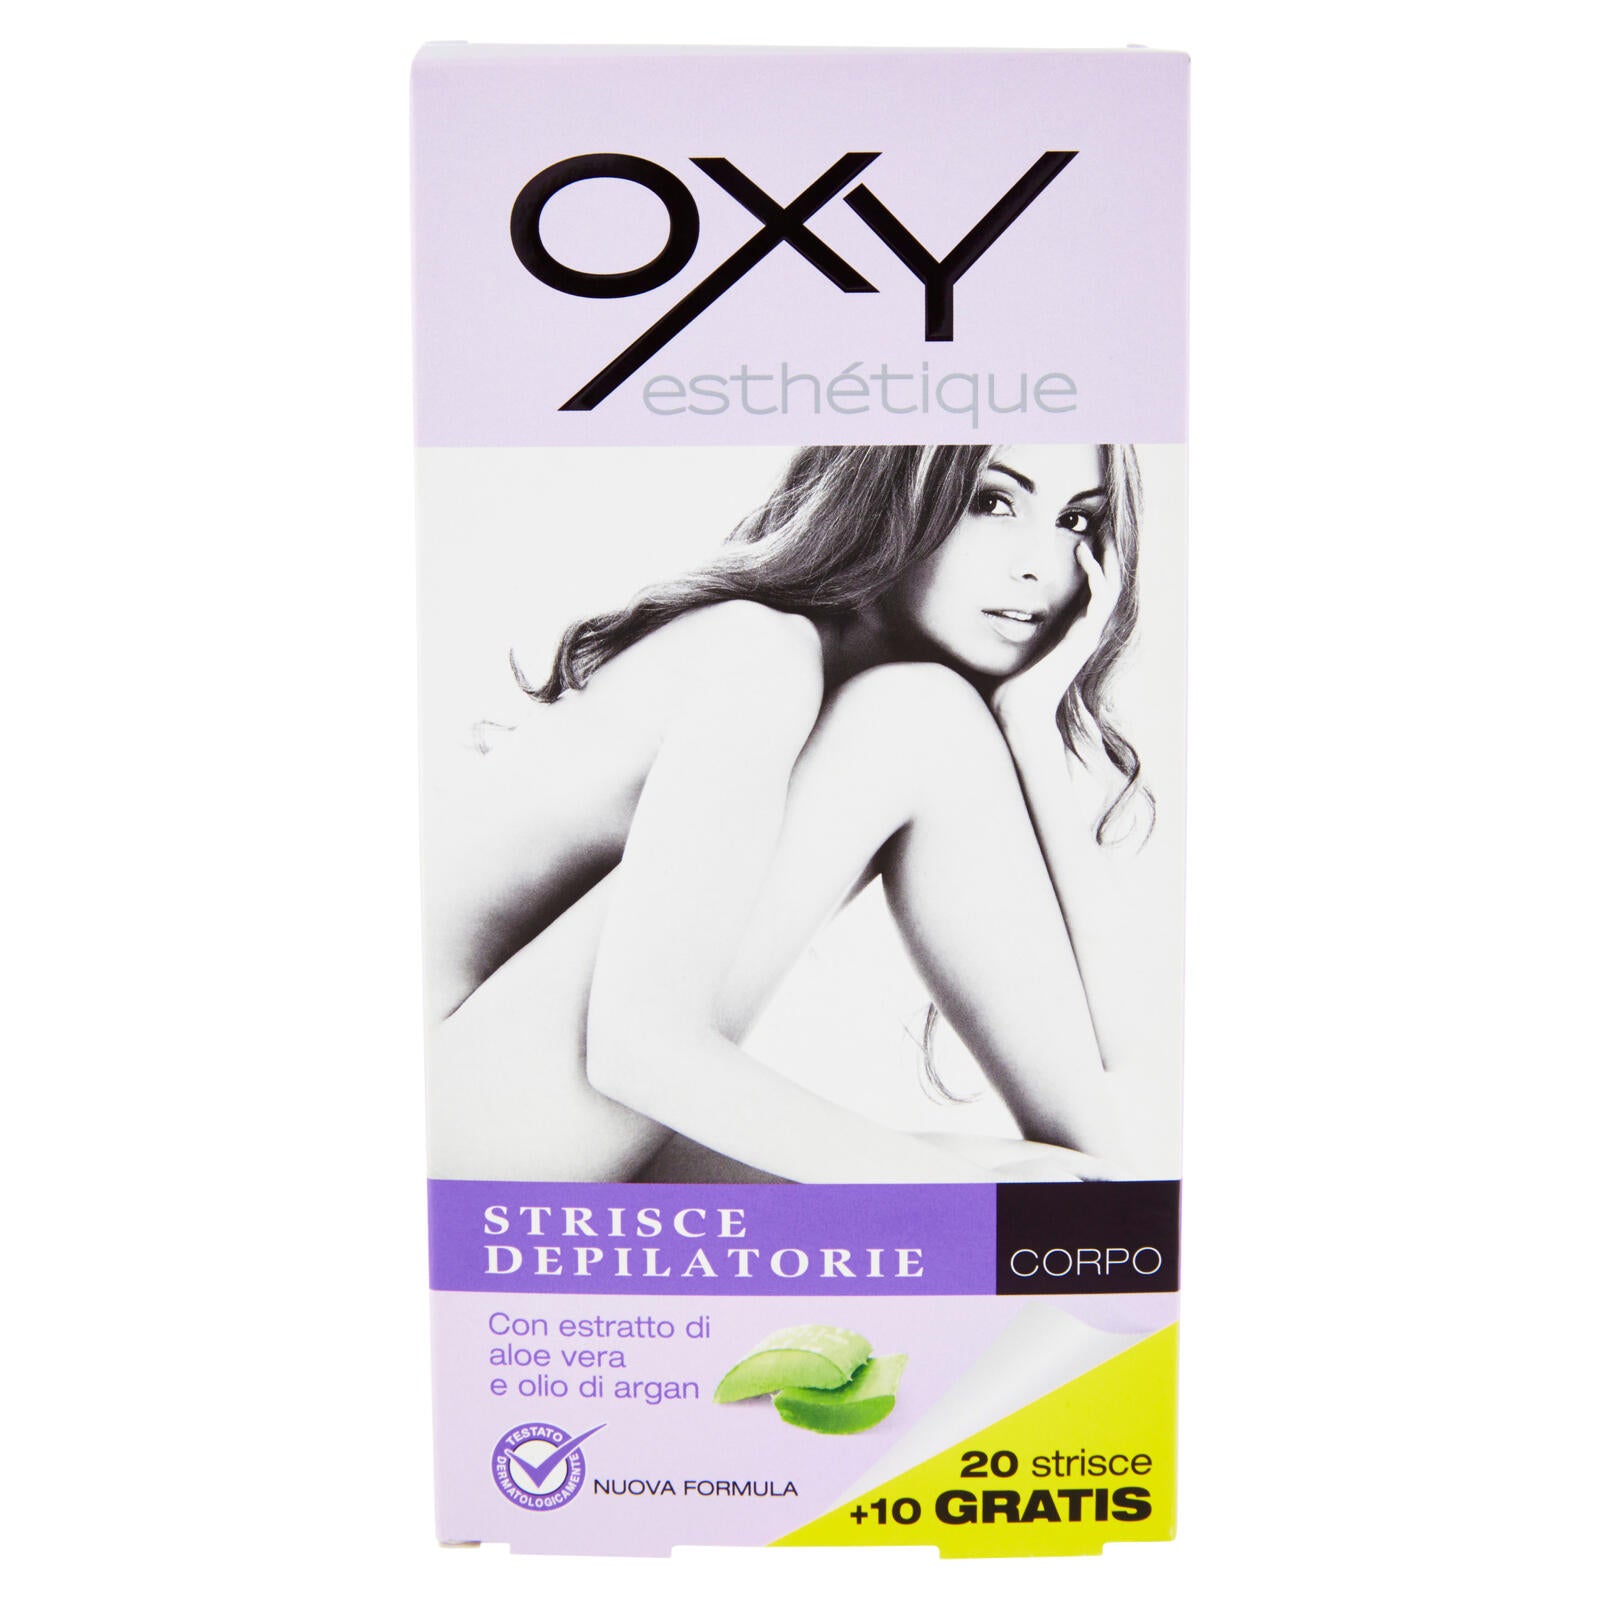 Oxy esthétique Strisce Depilatorie Corpo 20 strisce+10 Gratis